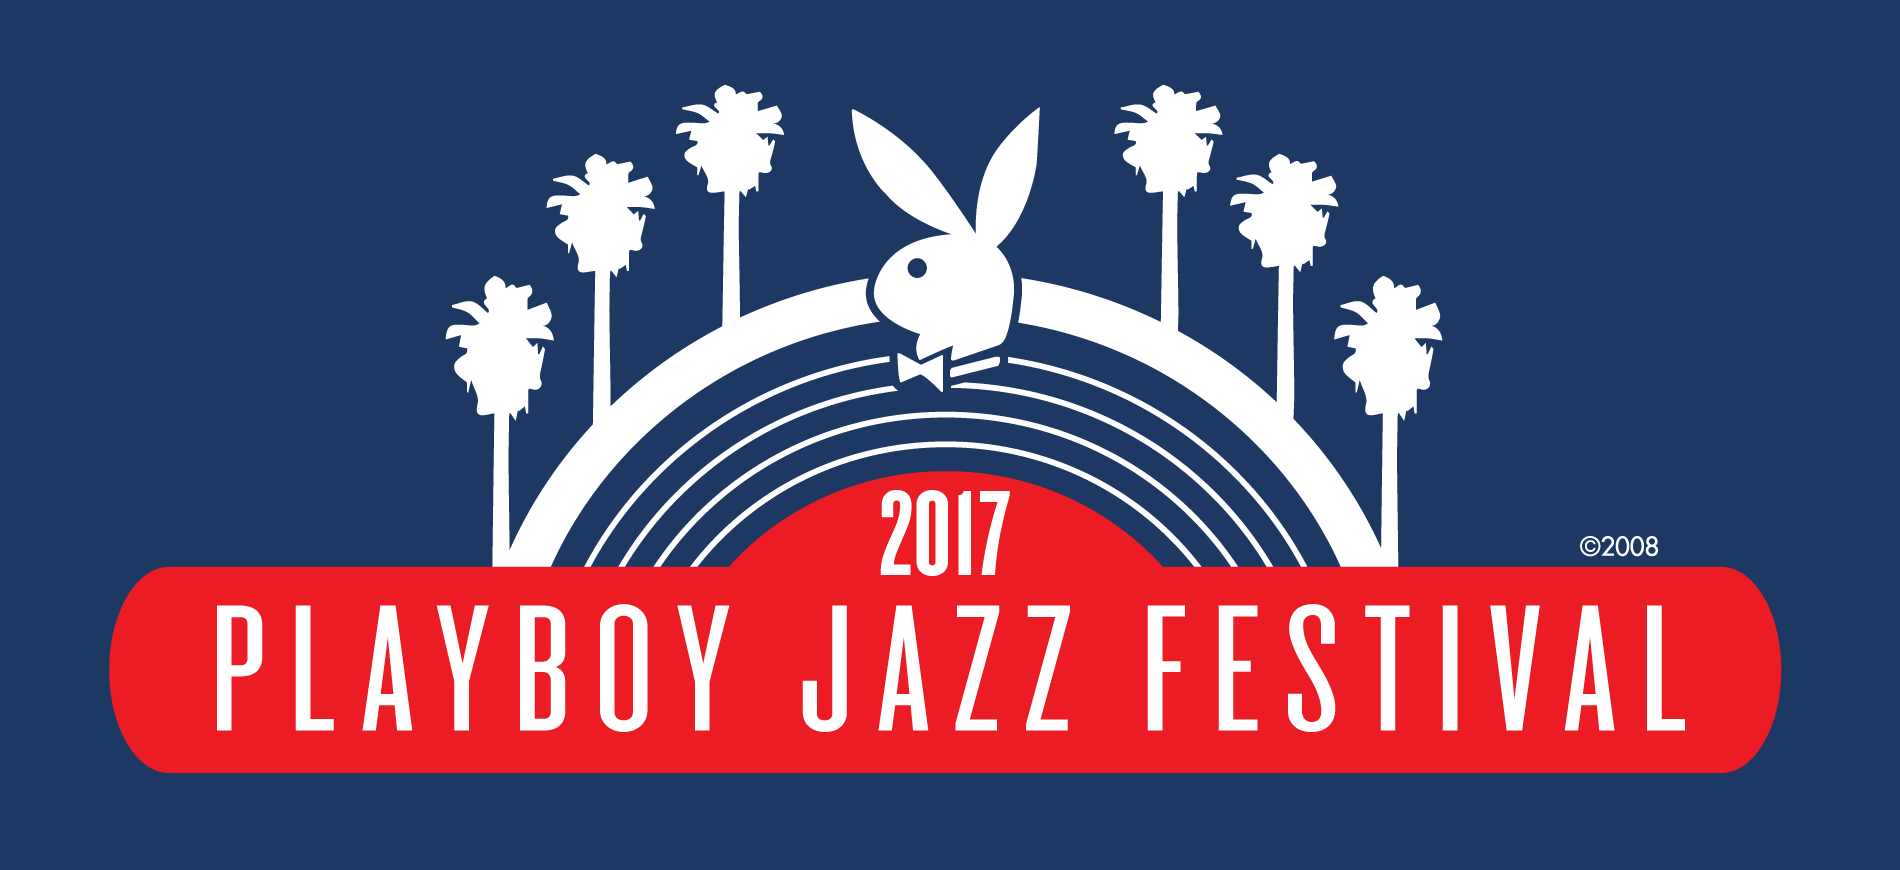 Playboy Jazz Fest 2017 banner